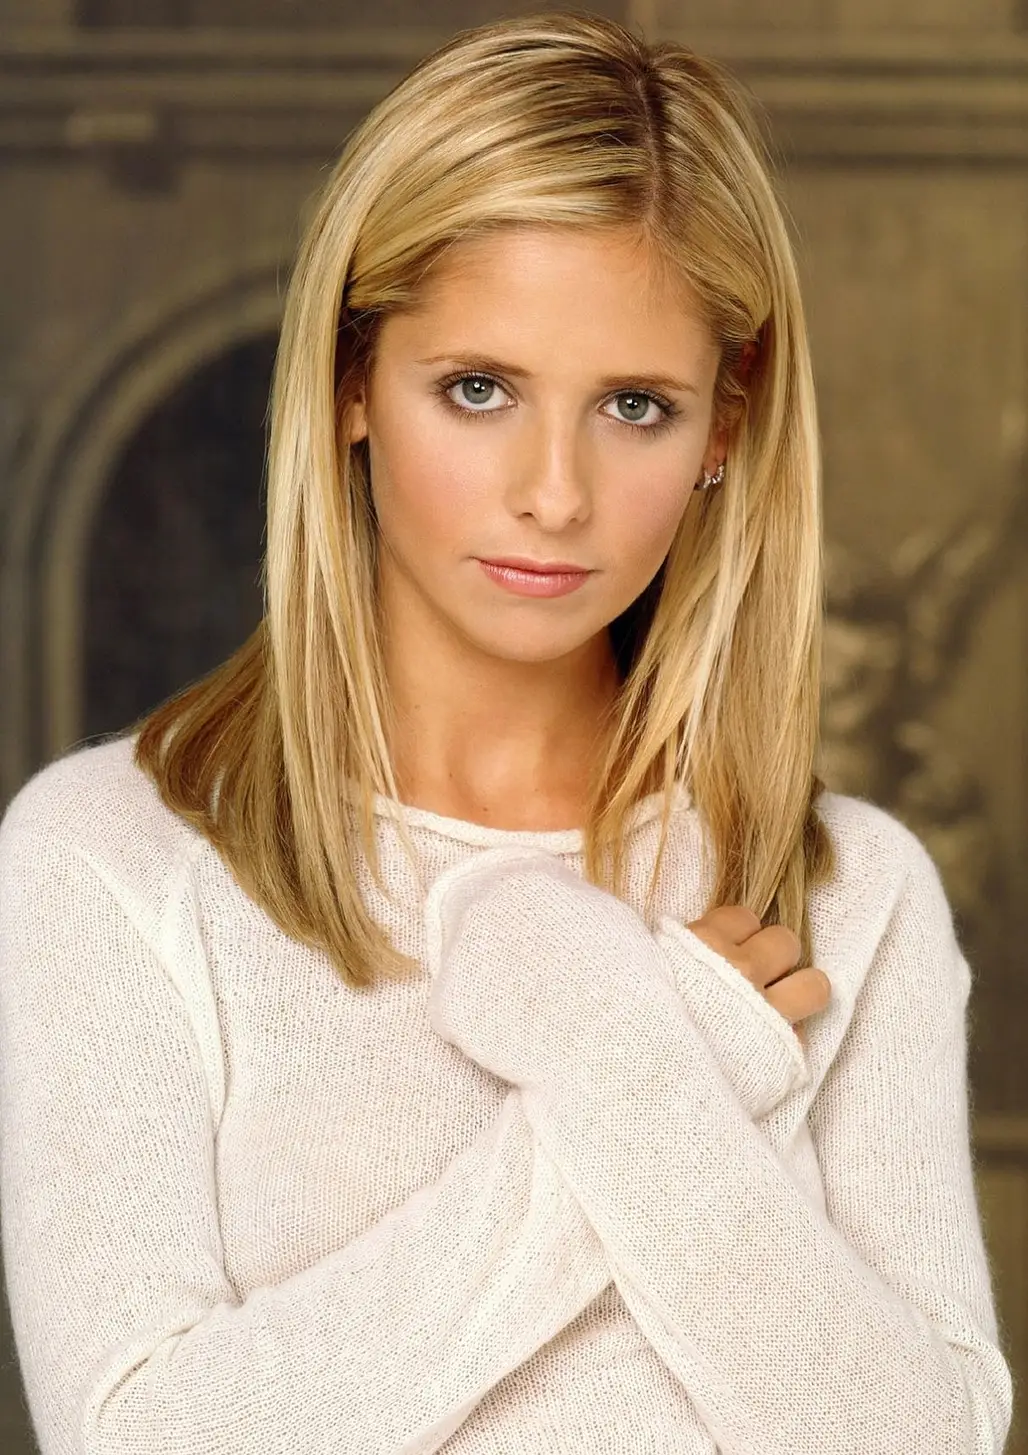 Buffy the Vampire Slayer’s Buffy Summers (1997-2003)